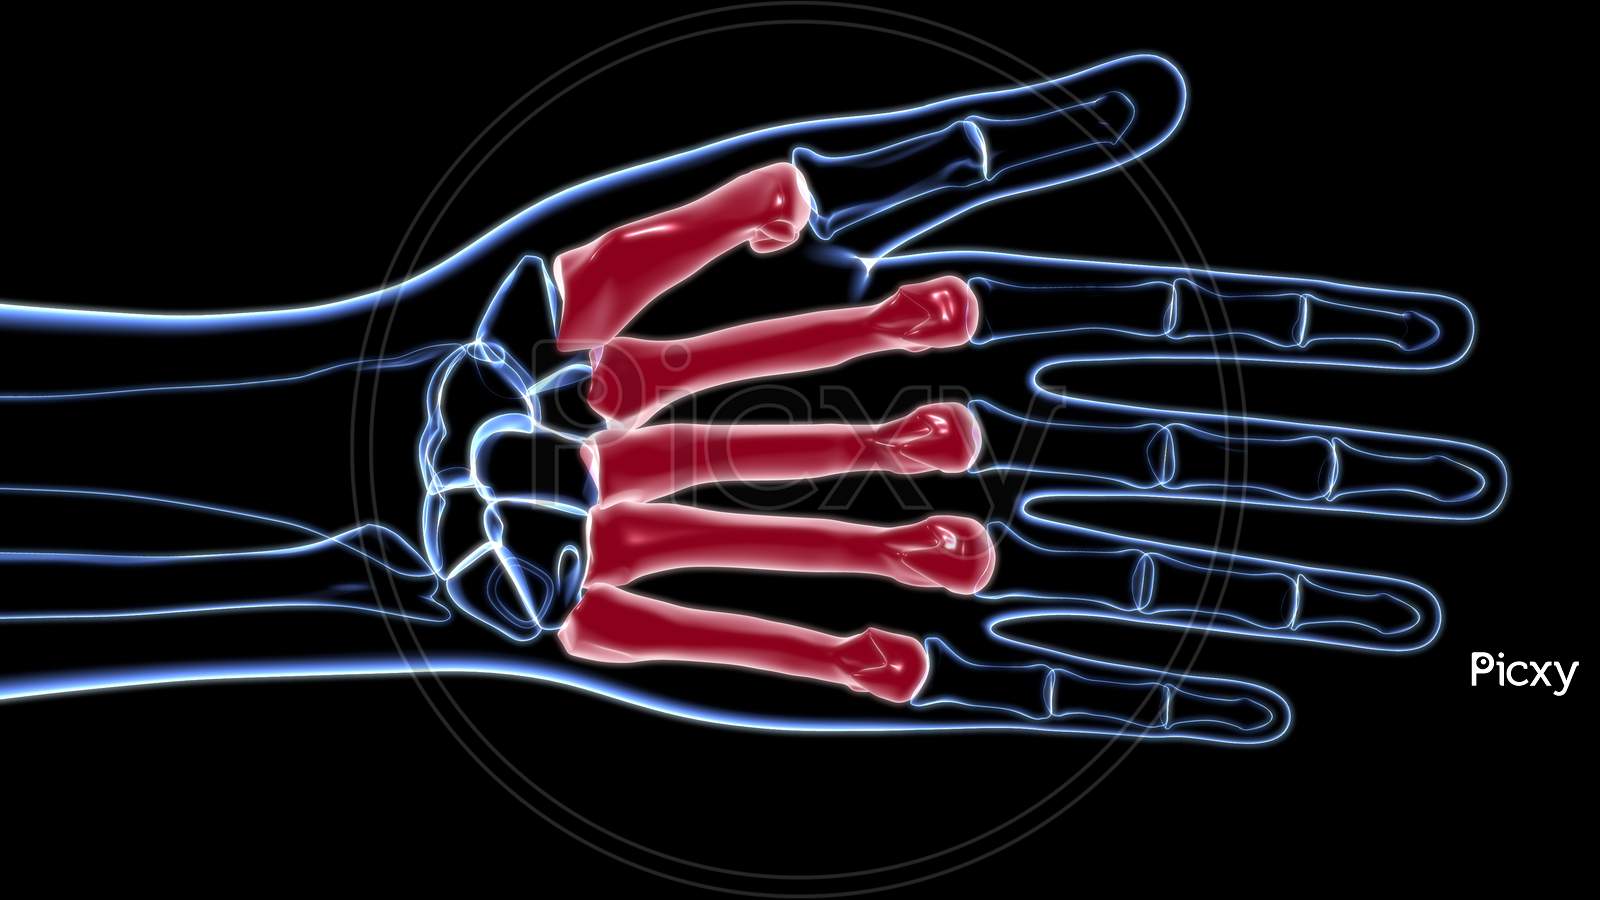 Human Skeleton Hand Matacarapls Bone Anatomy For Medical Concept